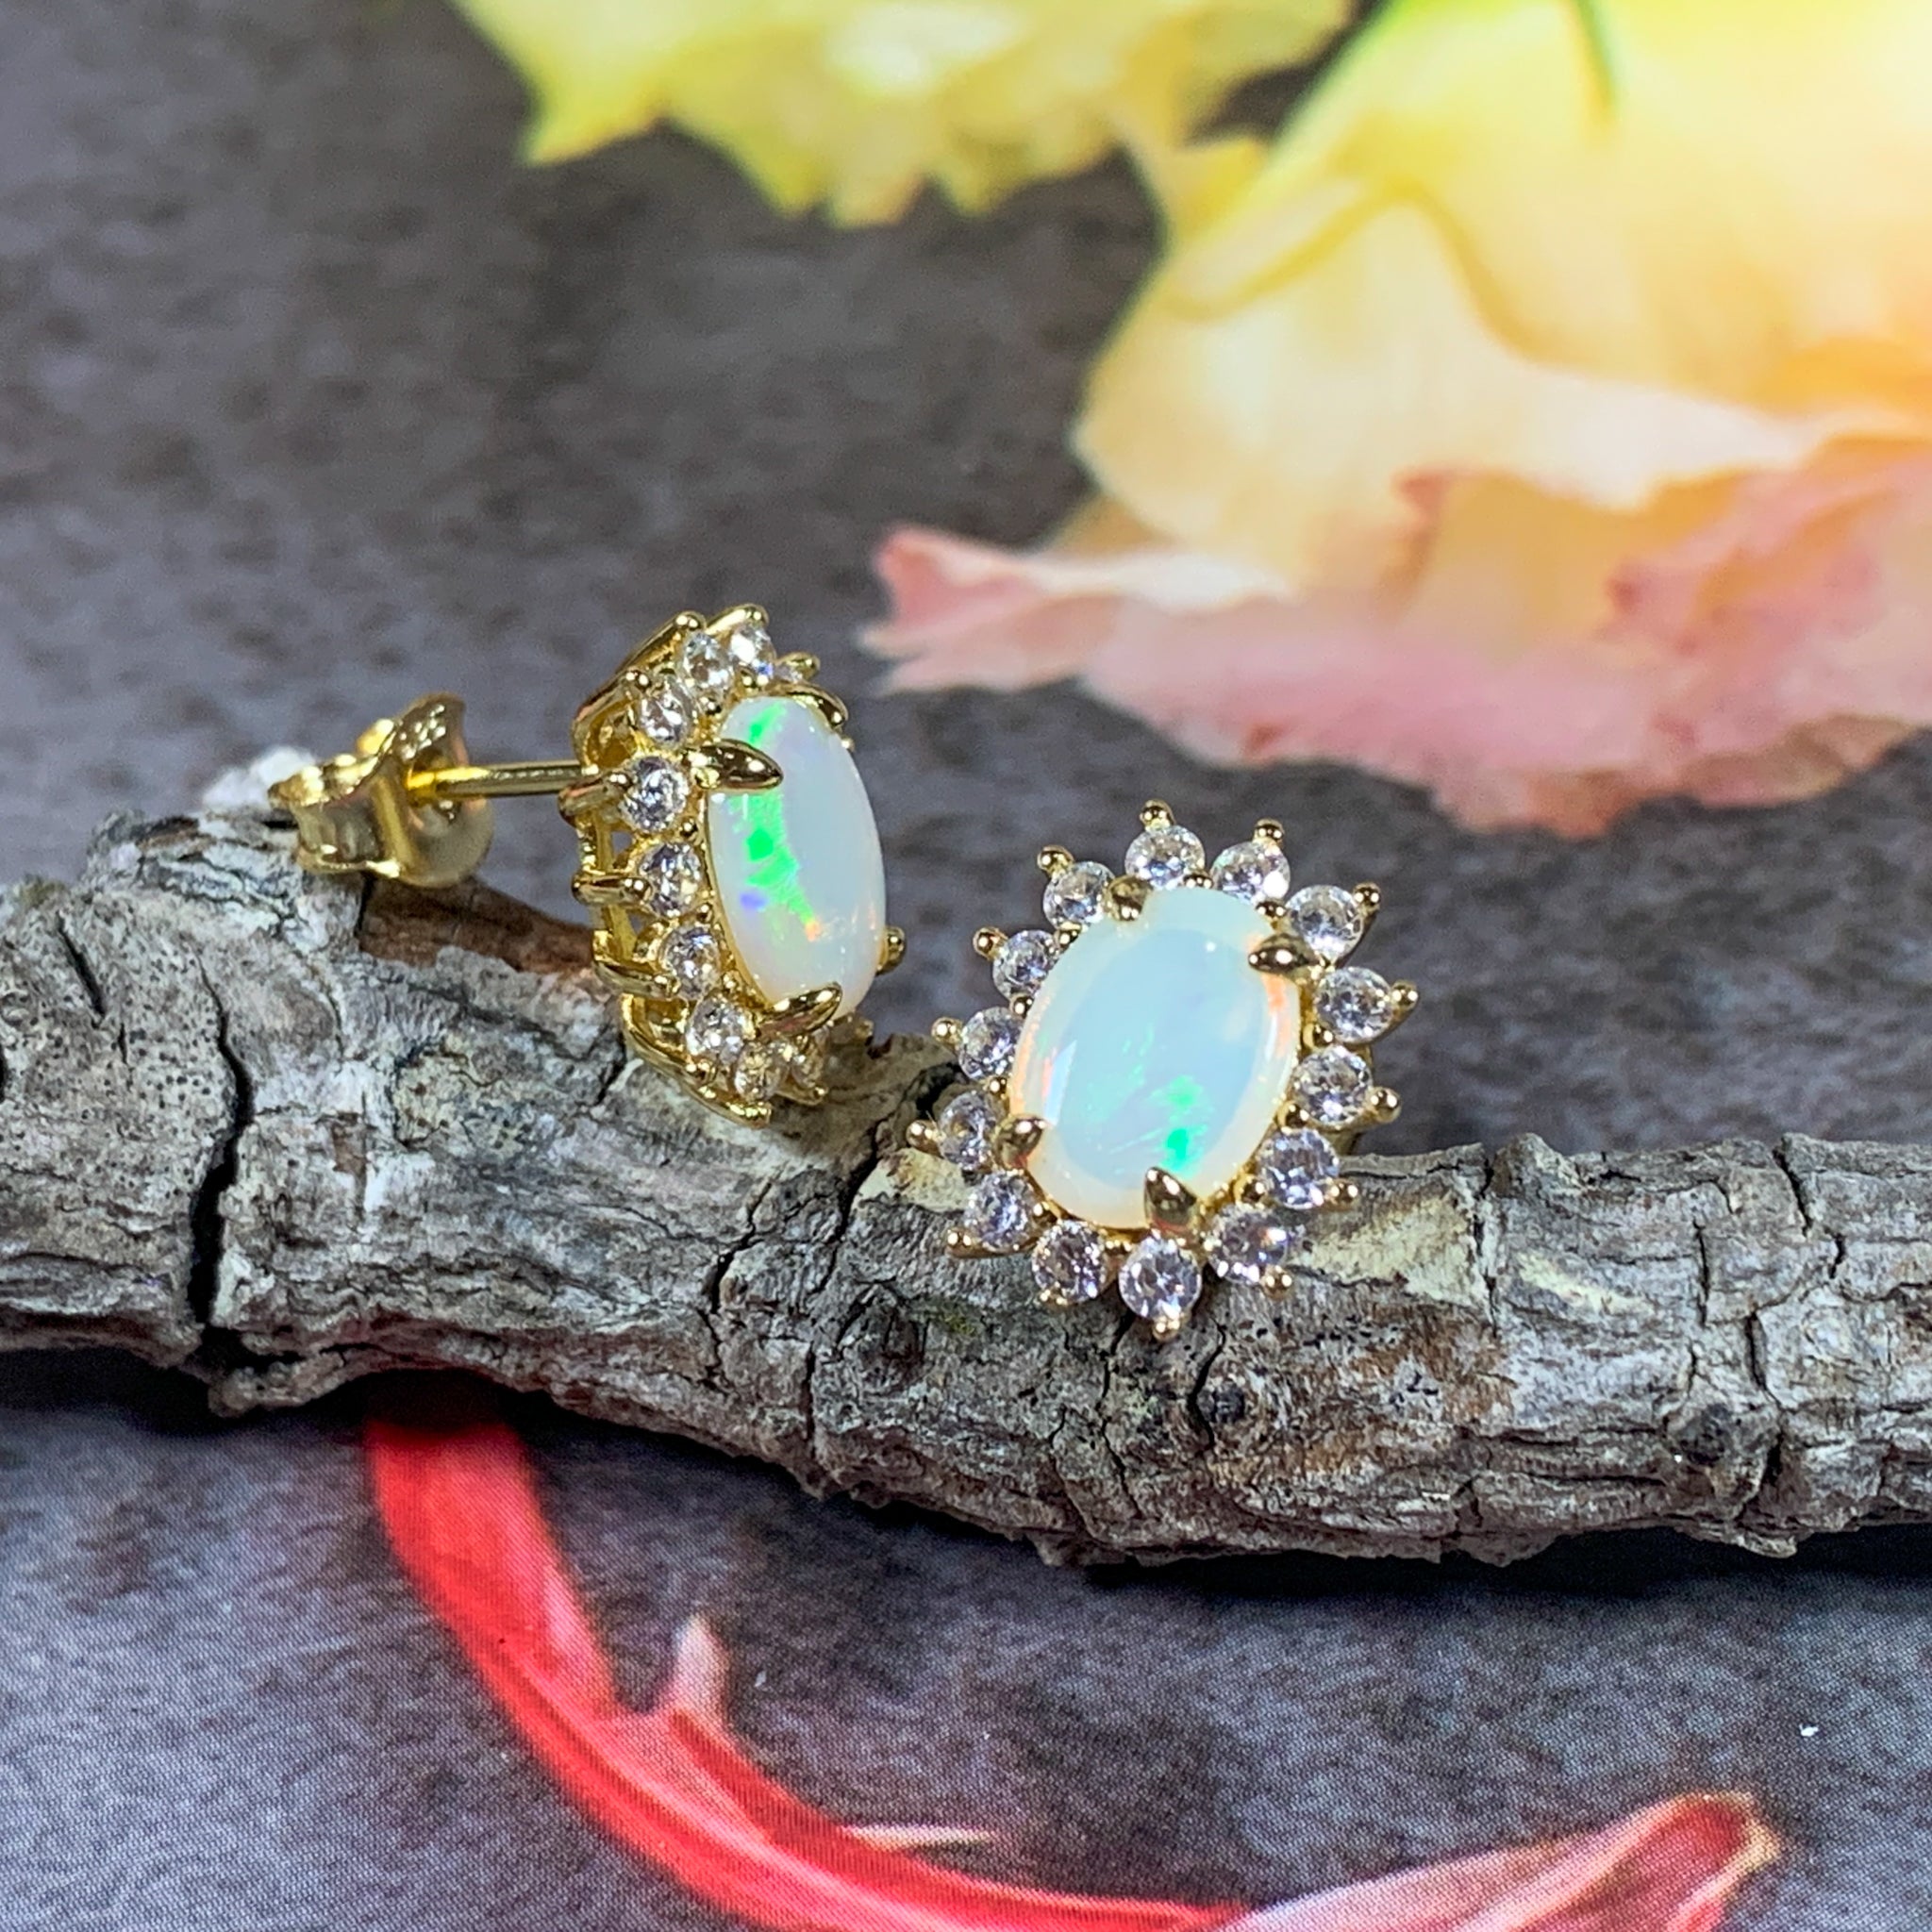 Sterling Silver Plated Gold Opal stud earrings set with White Opal 8x6mm - Masterpiece Jewellery Opal & Gems Sydney Australia | Online Shop